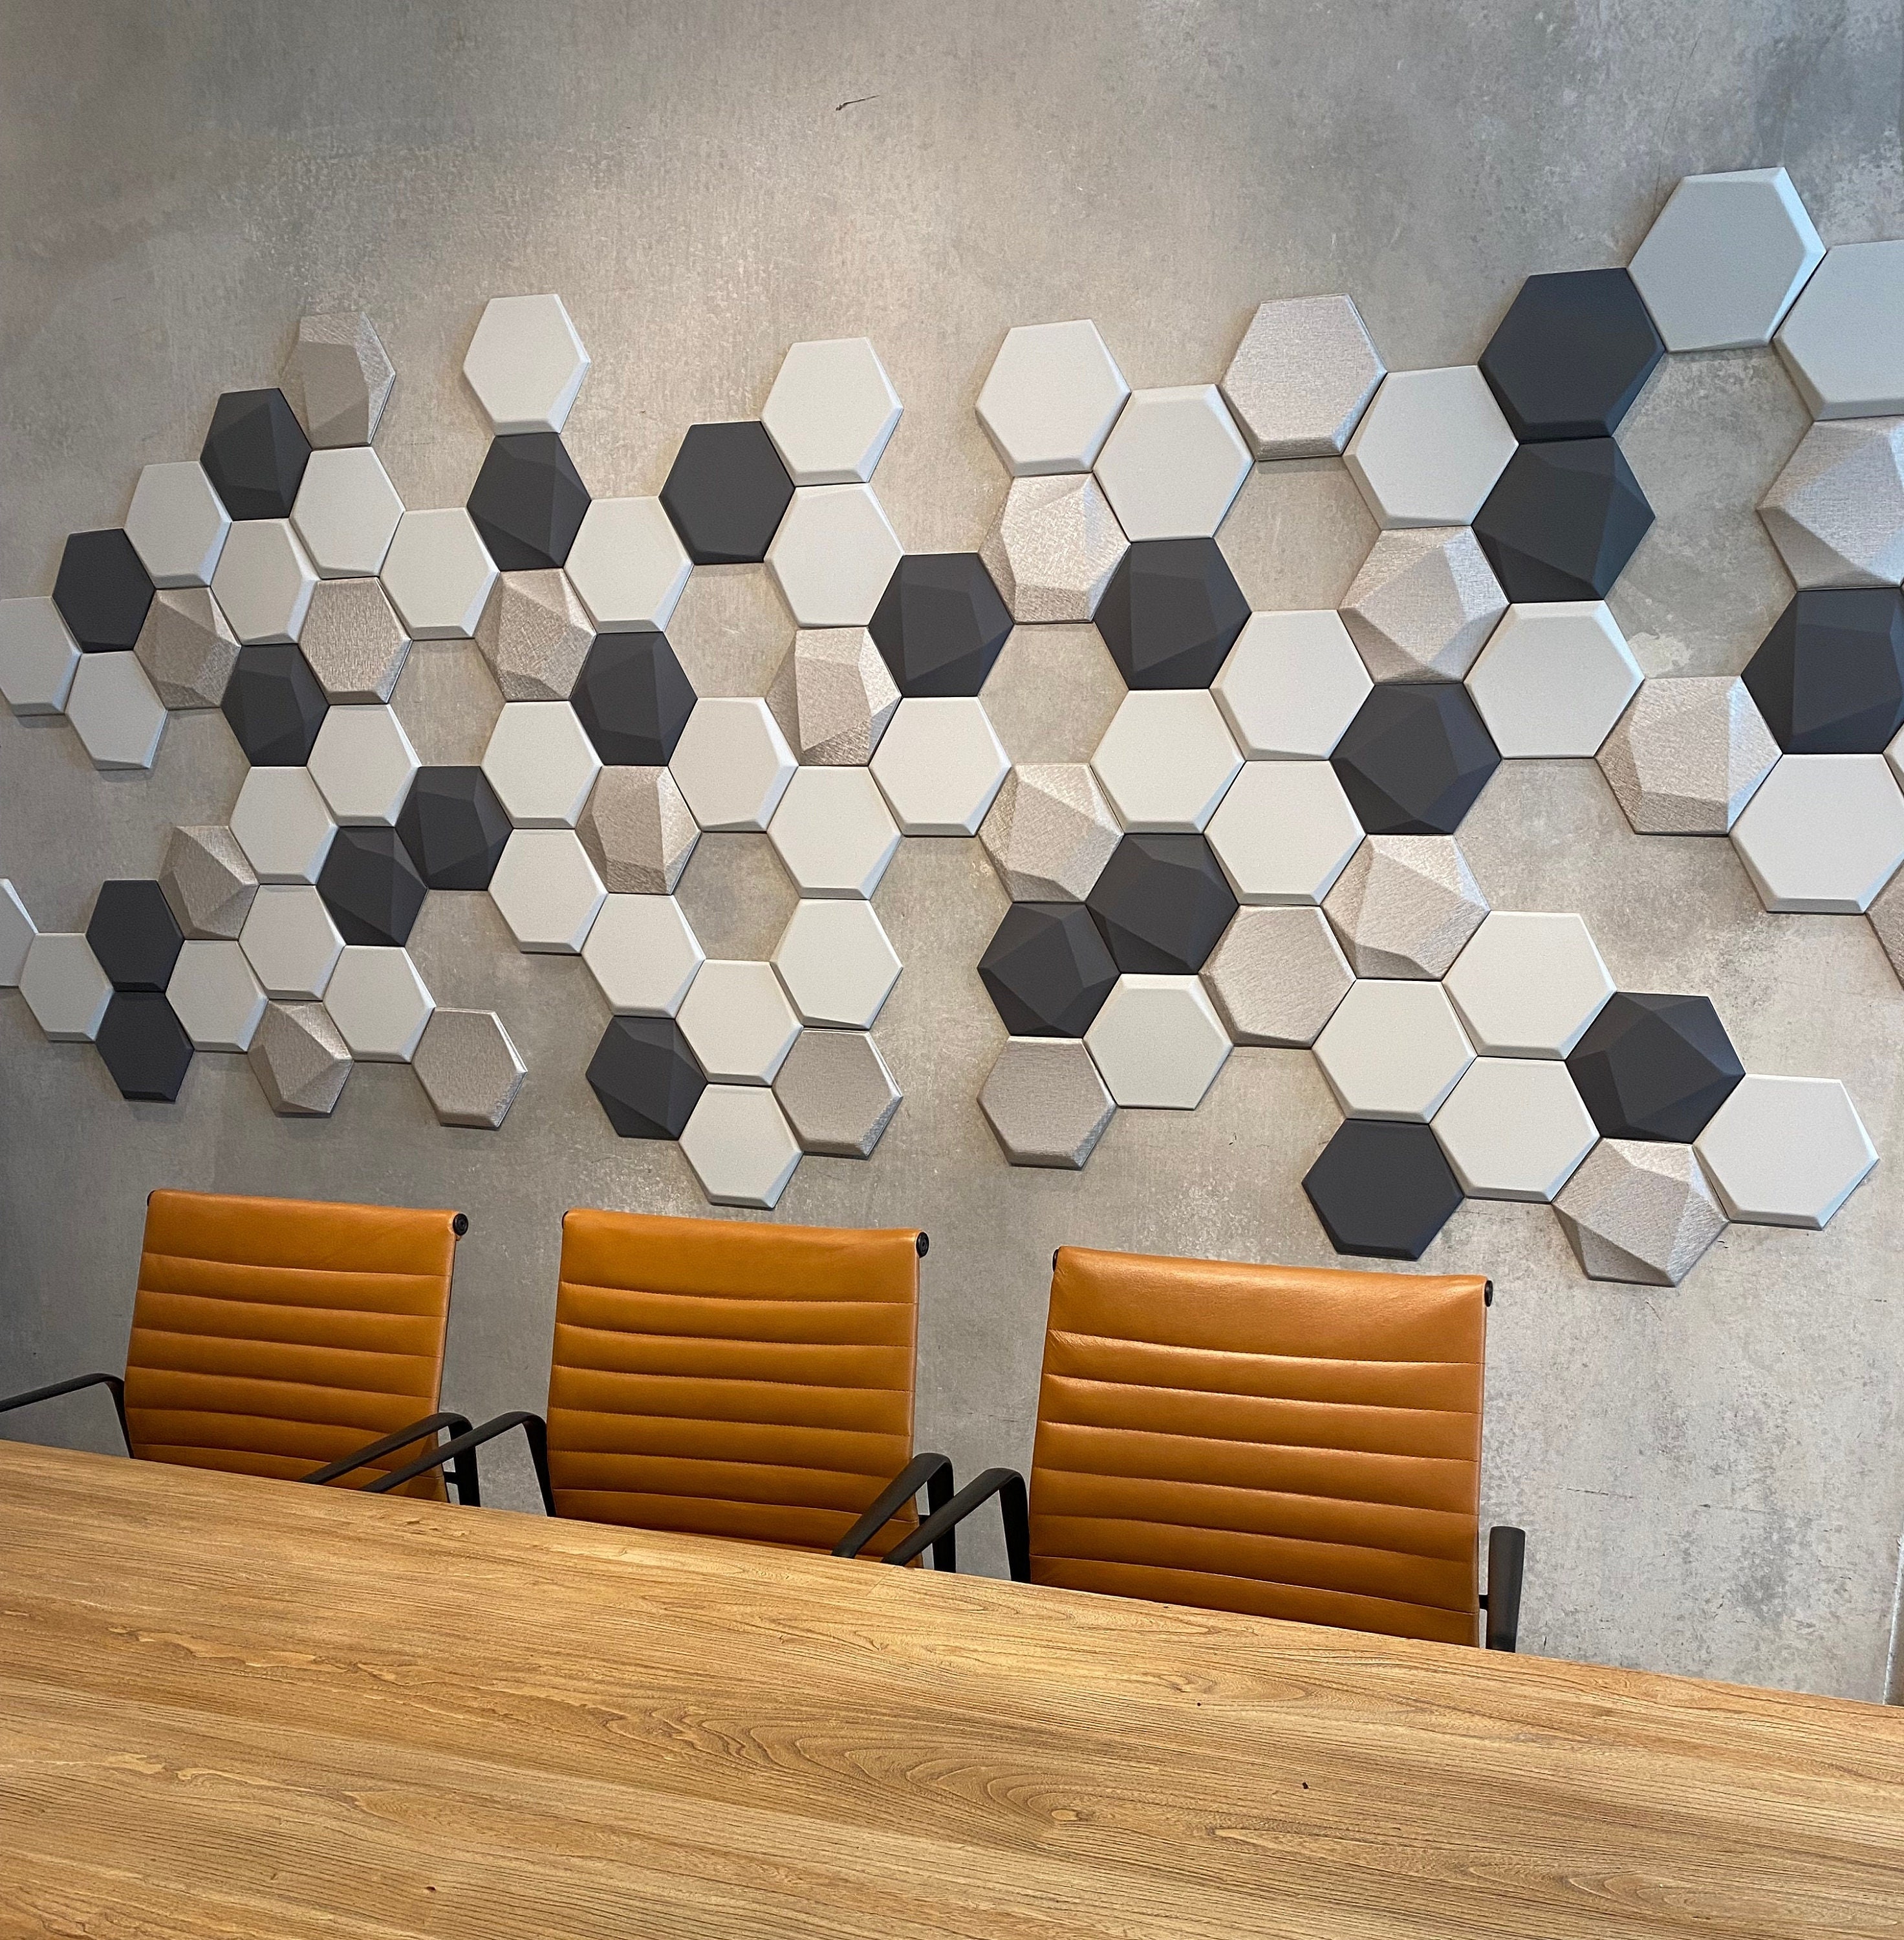 OFFICE ACOUSTIC PANEL Tile Decoration Sound Dampener Reduce 